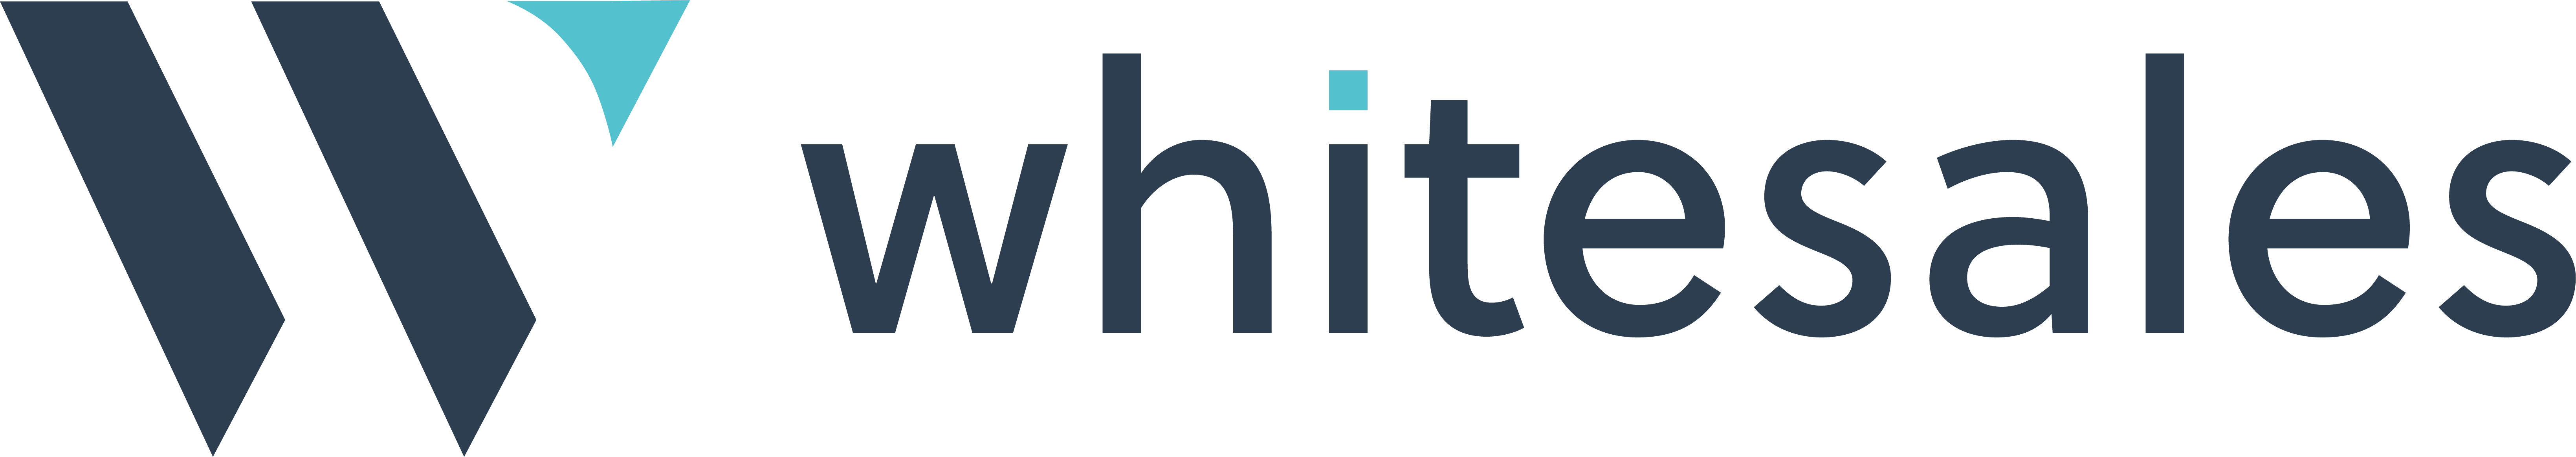 Whitesales logo horizontal navy and teal